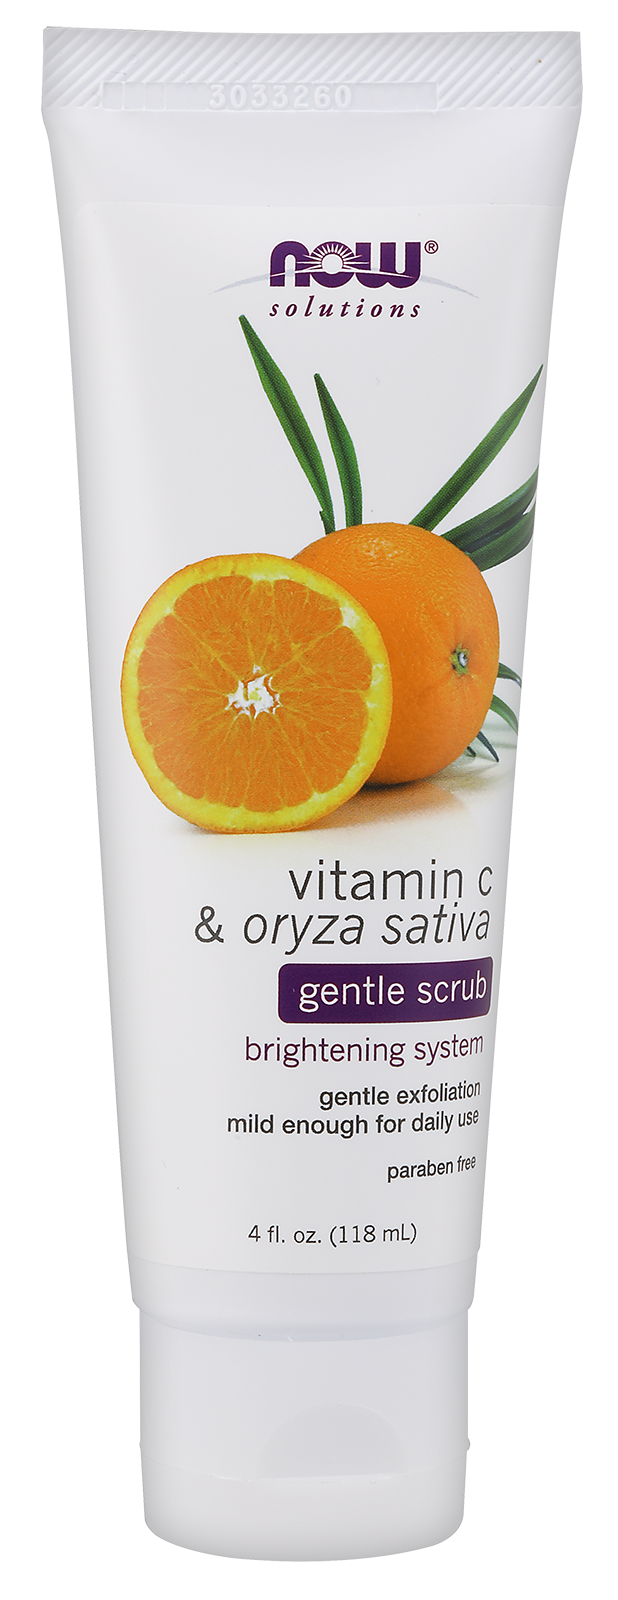 Vitamin C & Oryza Sativa Gentle Scrub - 4 fl. oz.